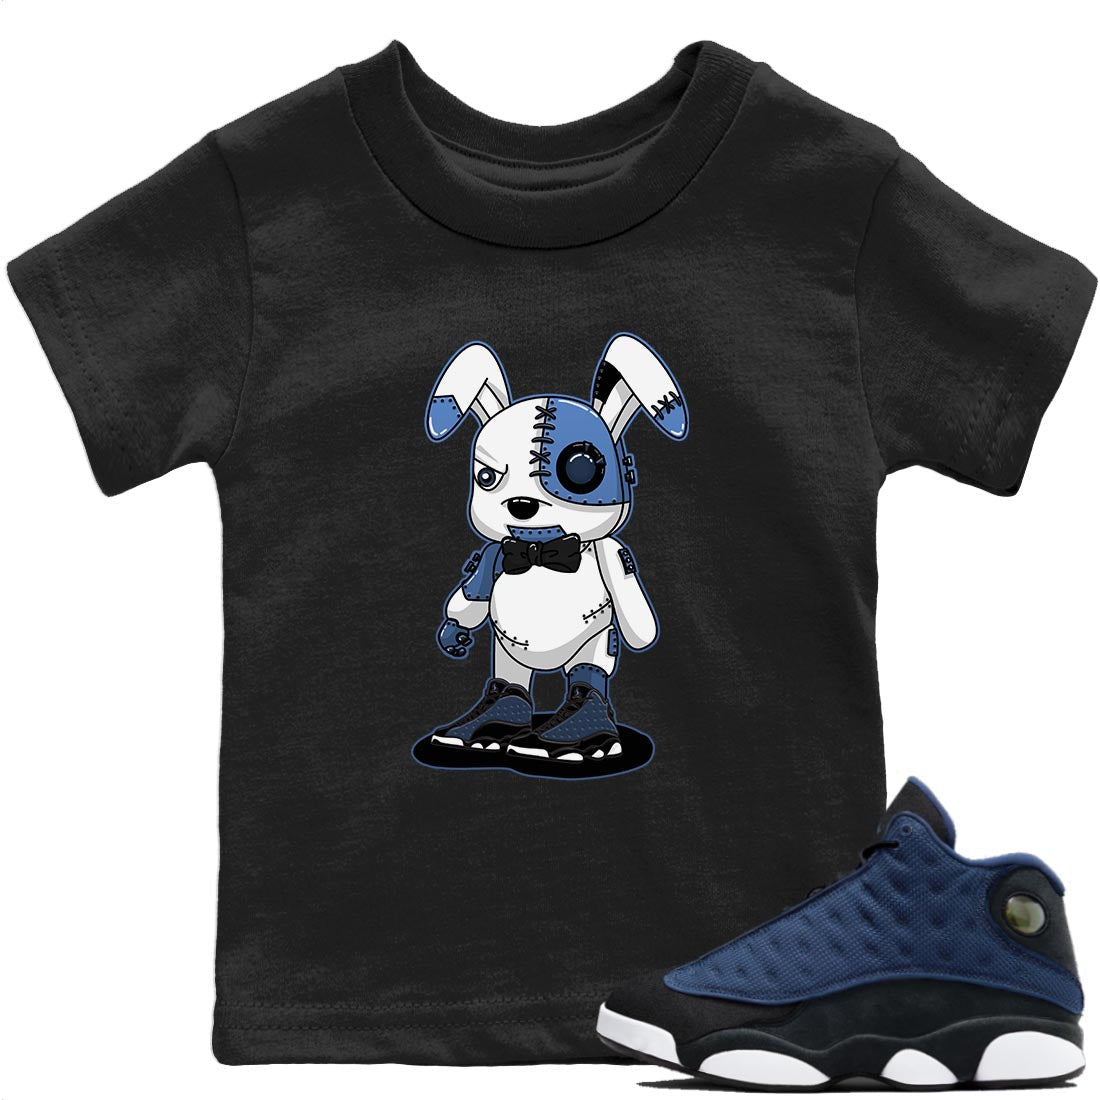 Jordan 13 Brave Blue Sneaker Match Tees Cyborg Bunny Sneaker Tees Jordan 13 Brave Blue Sneaker Release Tees Kids Shirts